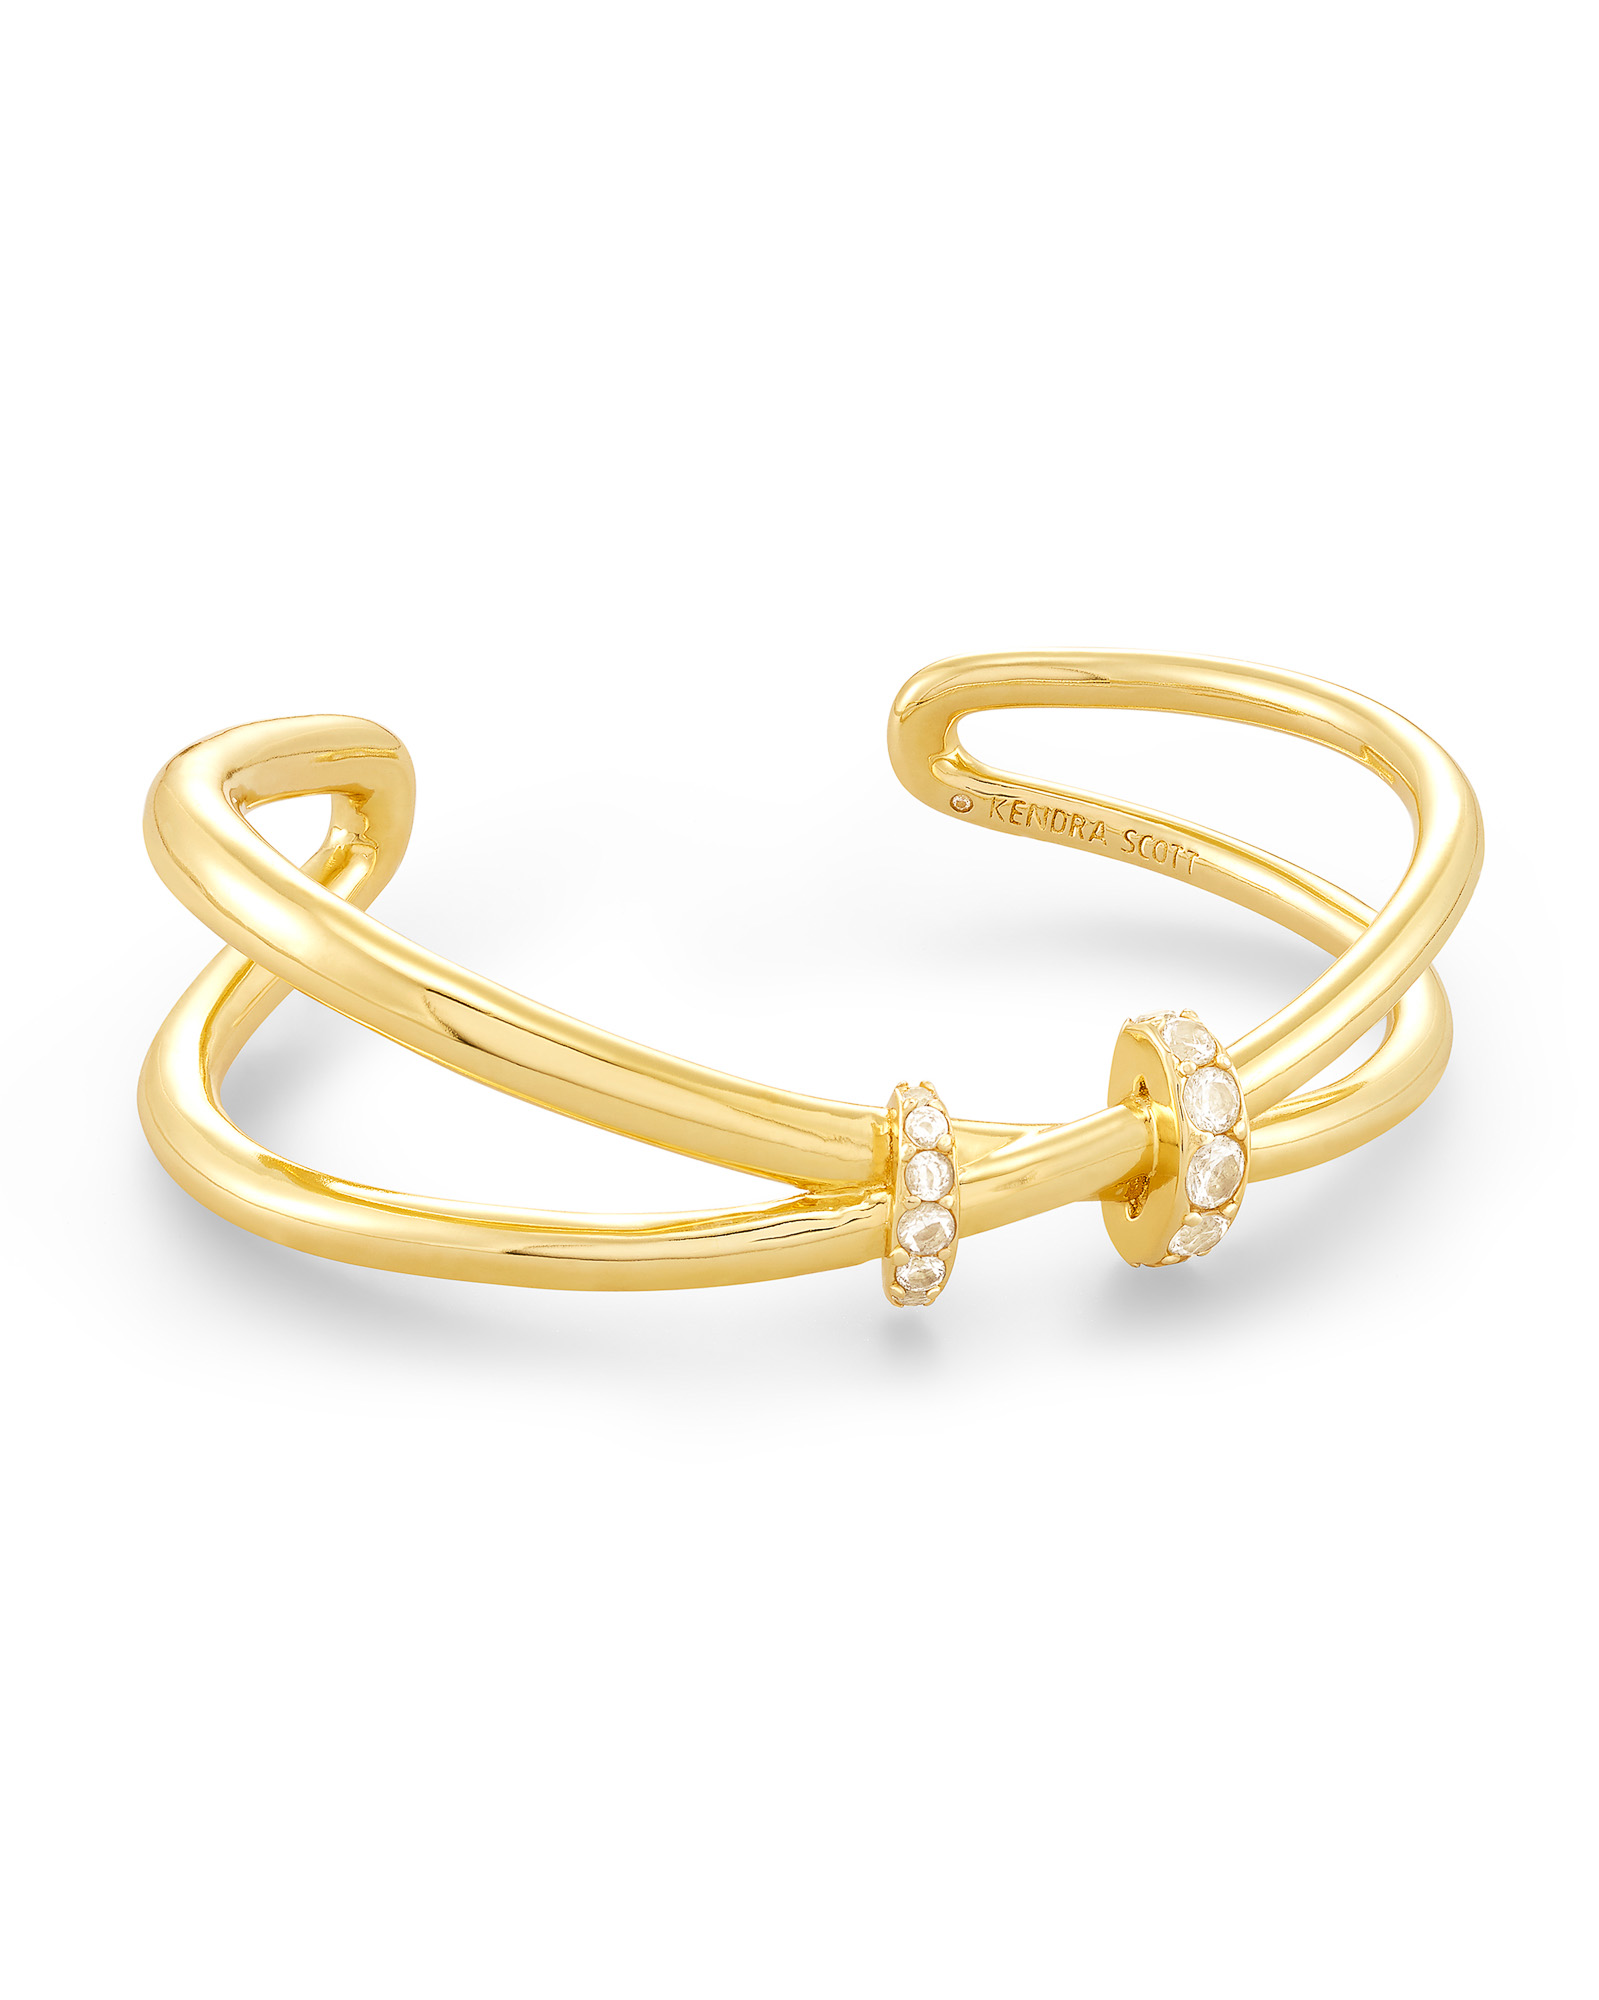 Livy Gold Cuff Bracelet in White Crystal | Kendra Scott